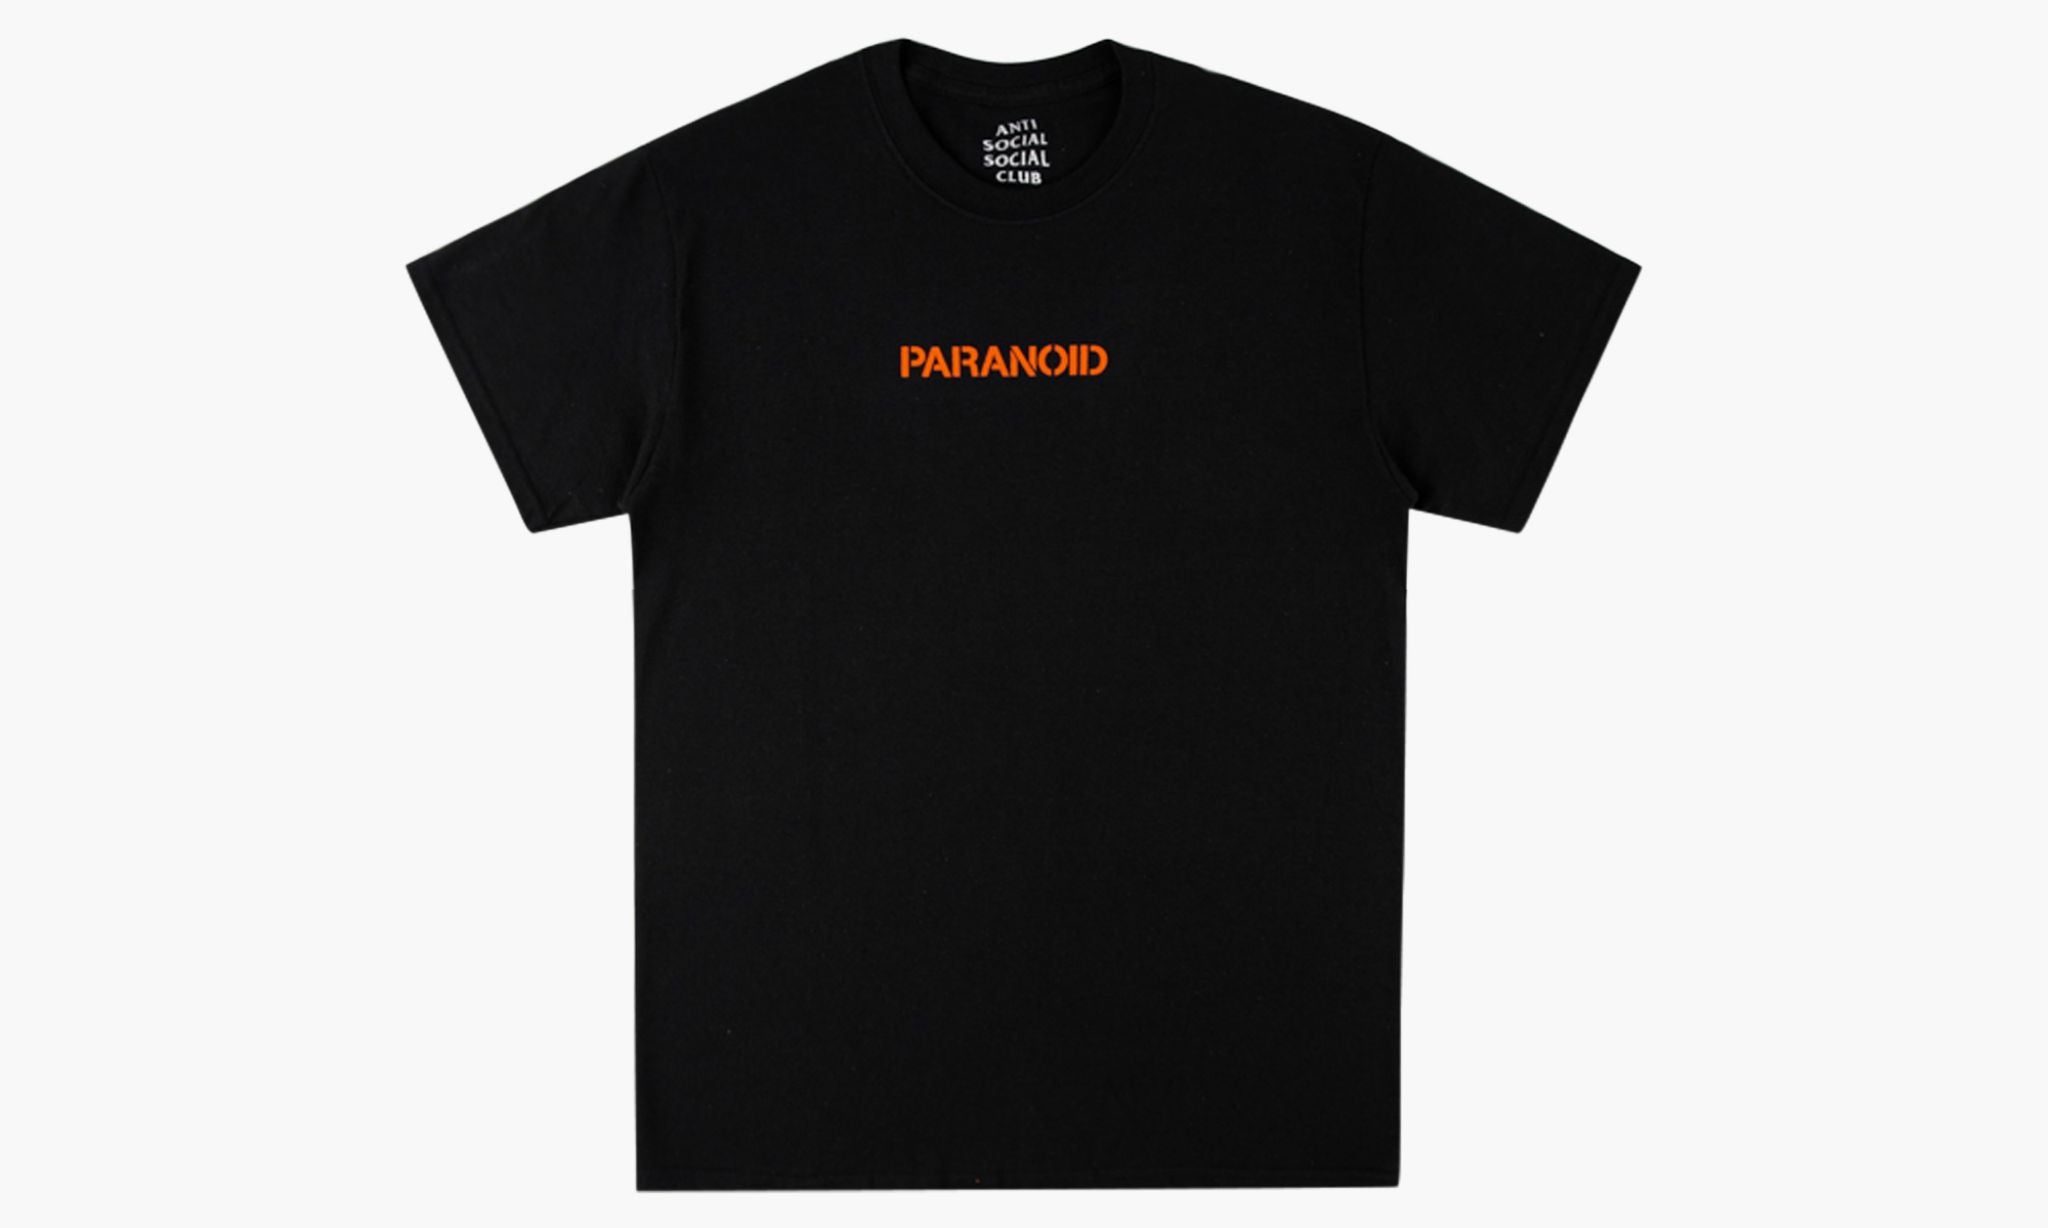 Buy Paranoid Black T-Shirt from Anti Social Social Club Online  